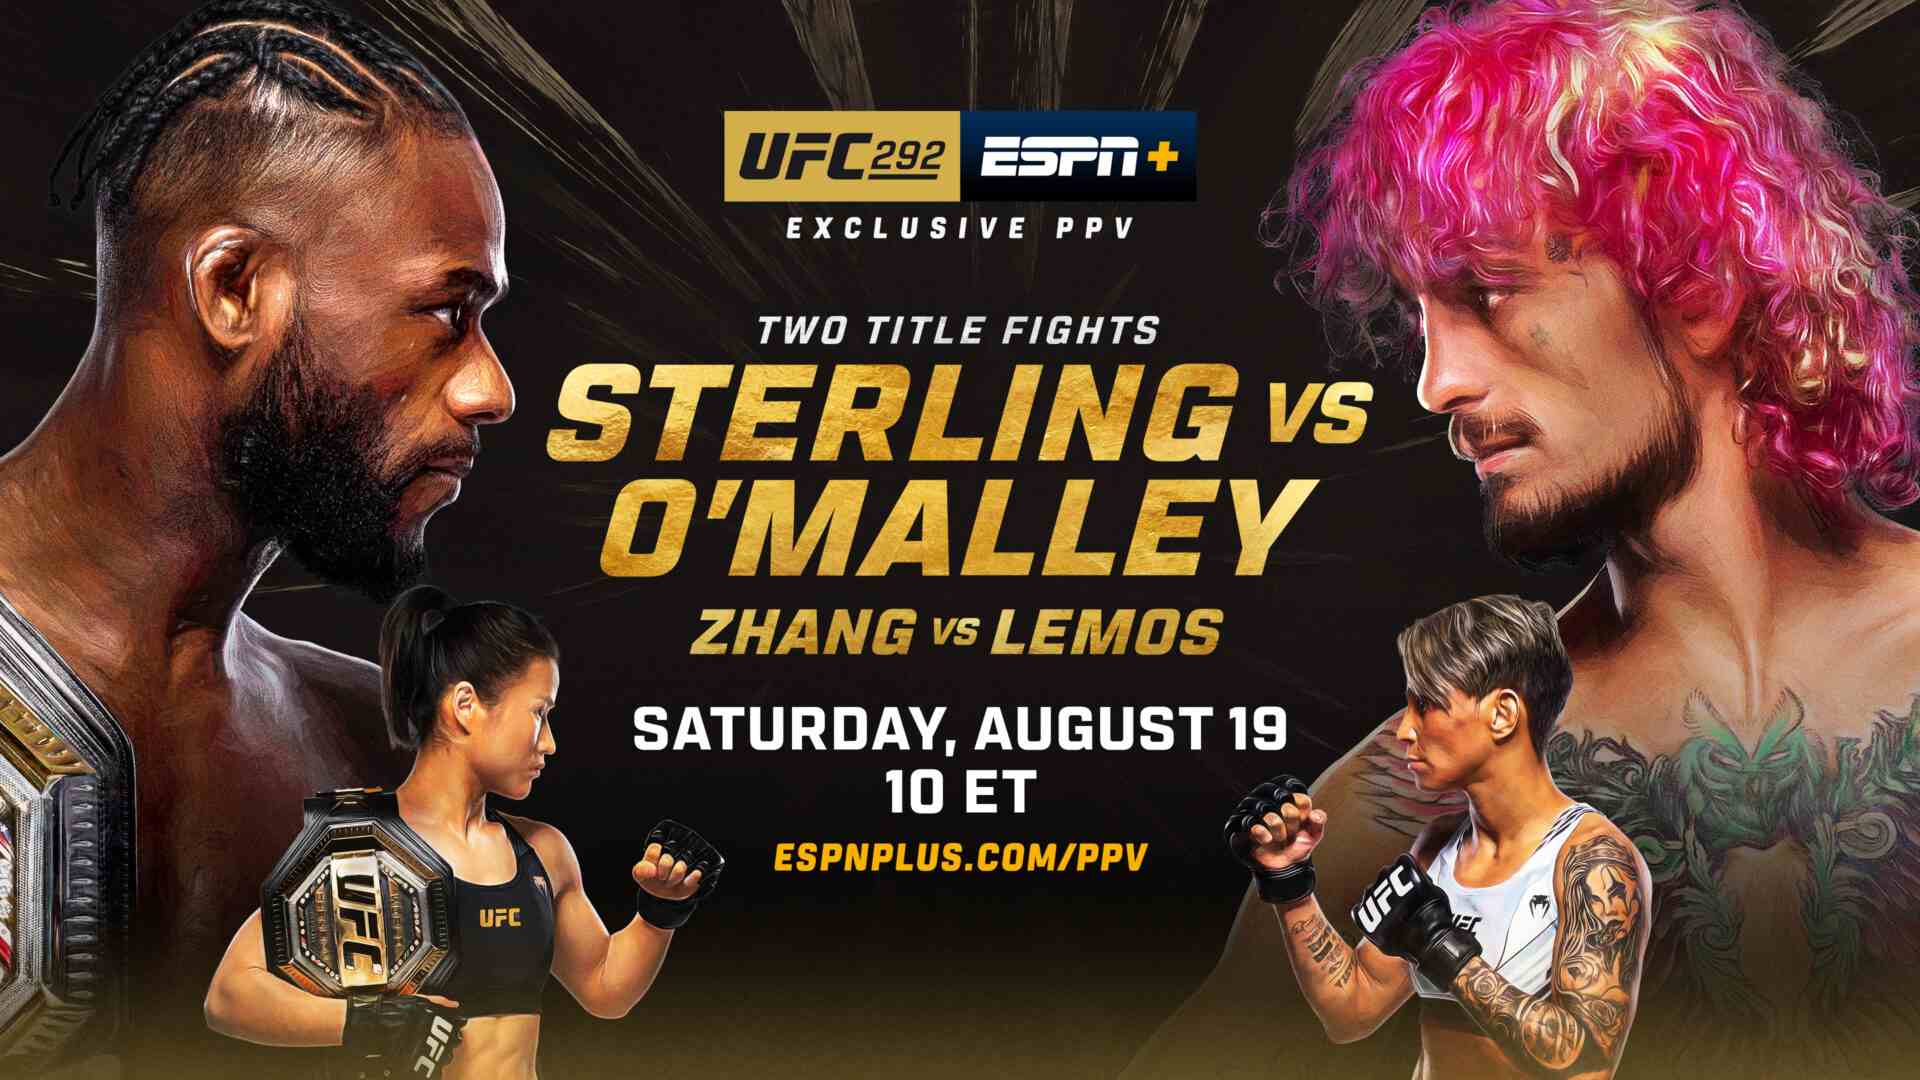 UFC 292 Preview & Odds: Aljamain Sterling favored vs. Sean O'Malley